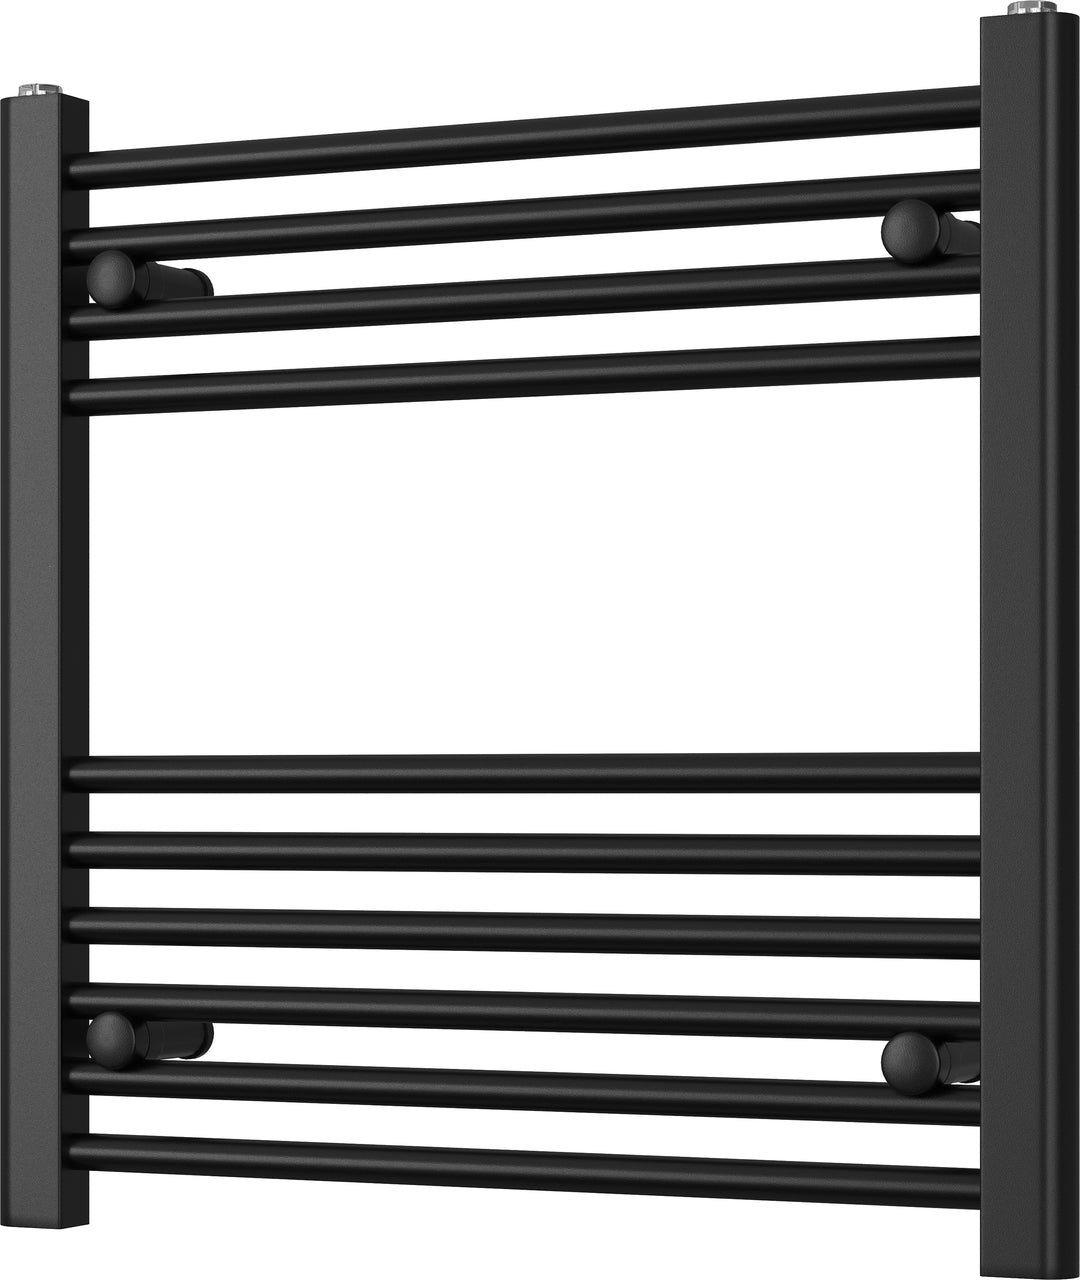 Zennor - Black Heated Towel Rail - H600mm x W600mm - Straight